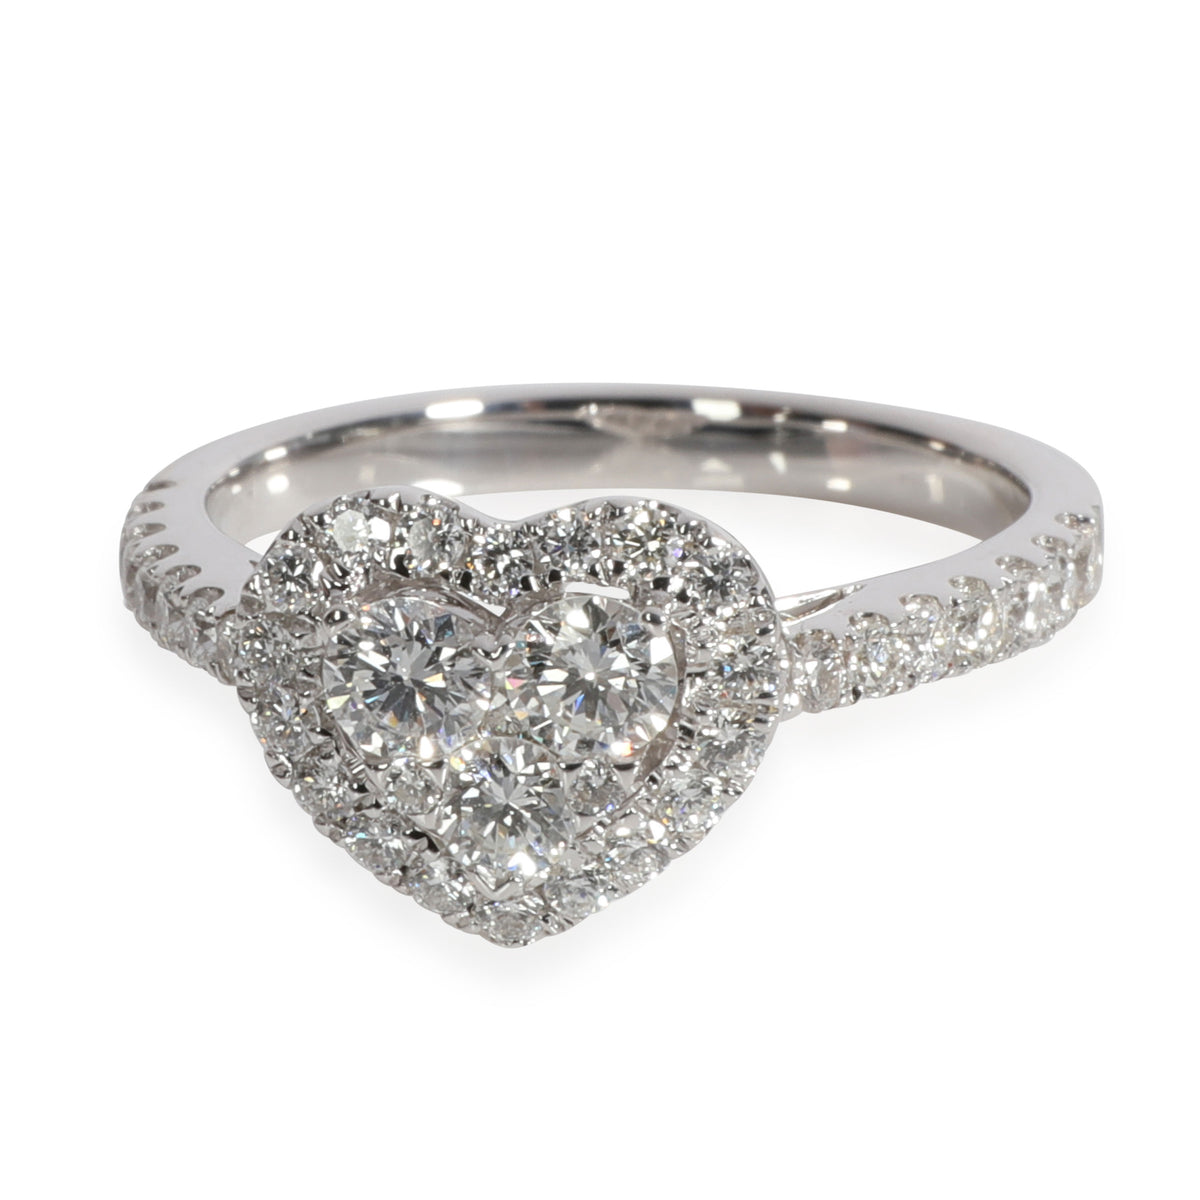 Diamond Heart Shaped  Ring in 18K White Gold 0.73 CTW